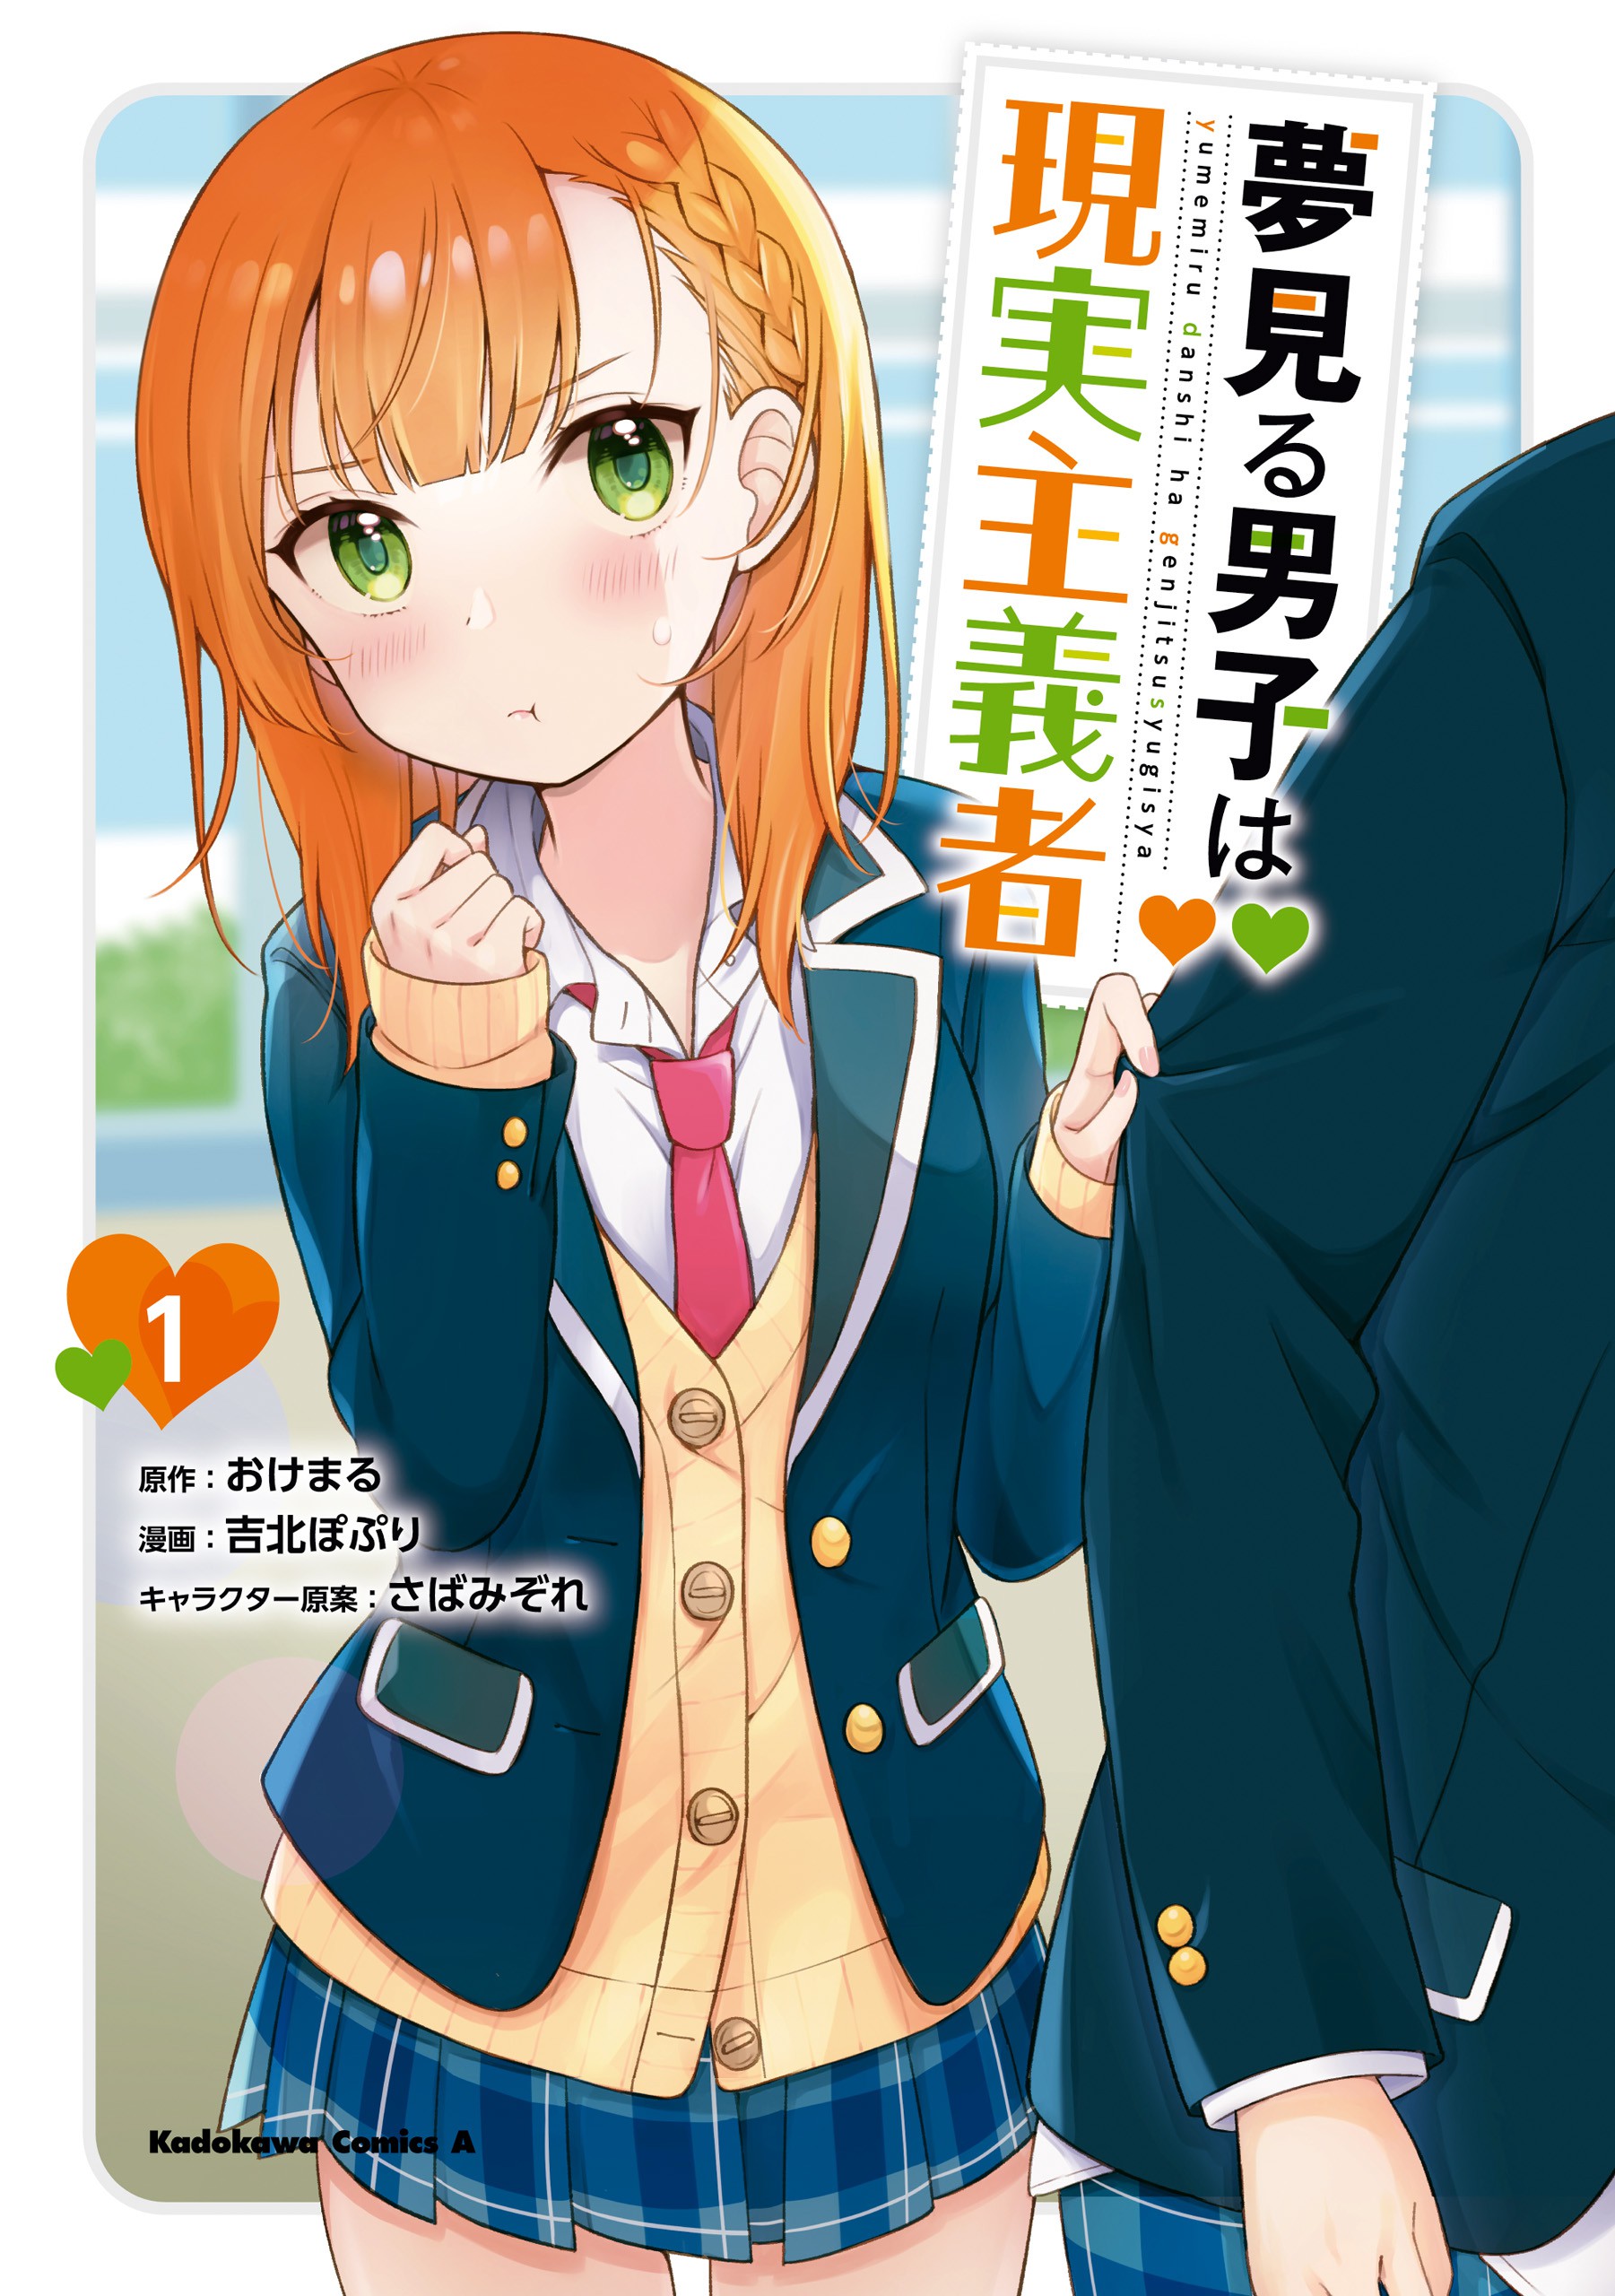 Yumemiru Danshi wa Genjitsushugisha Manga Cover Volume 1